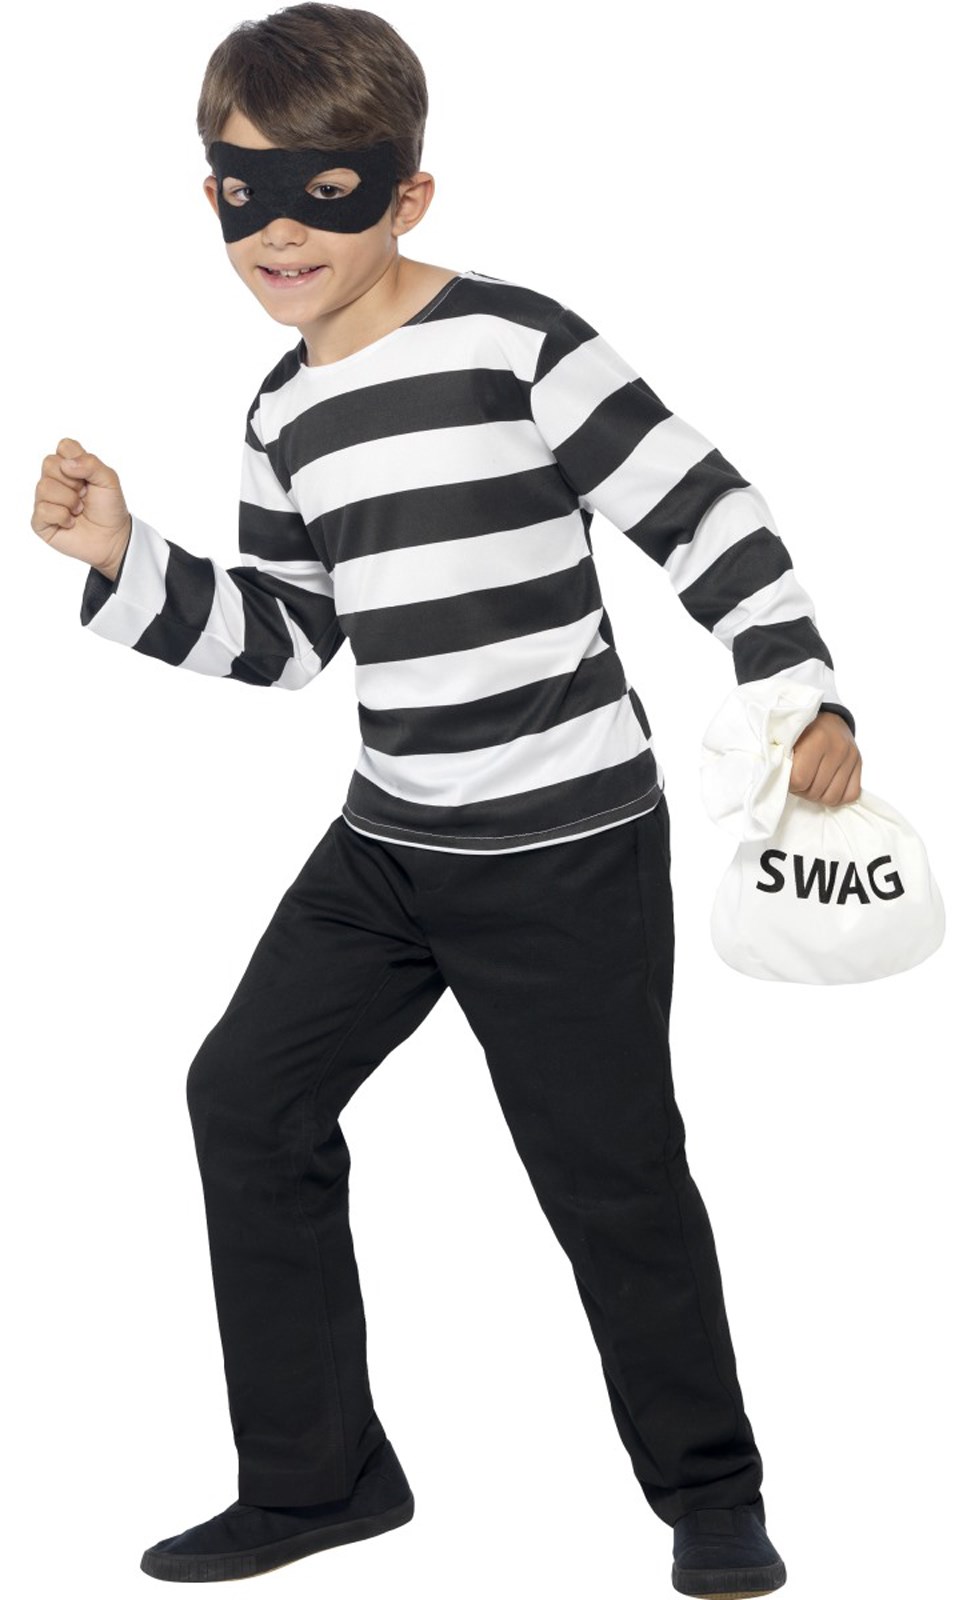 Burglar Costume Kit For Kids